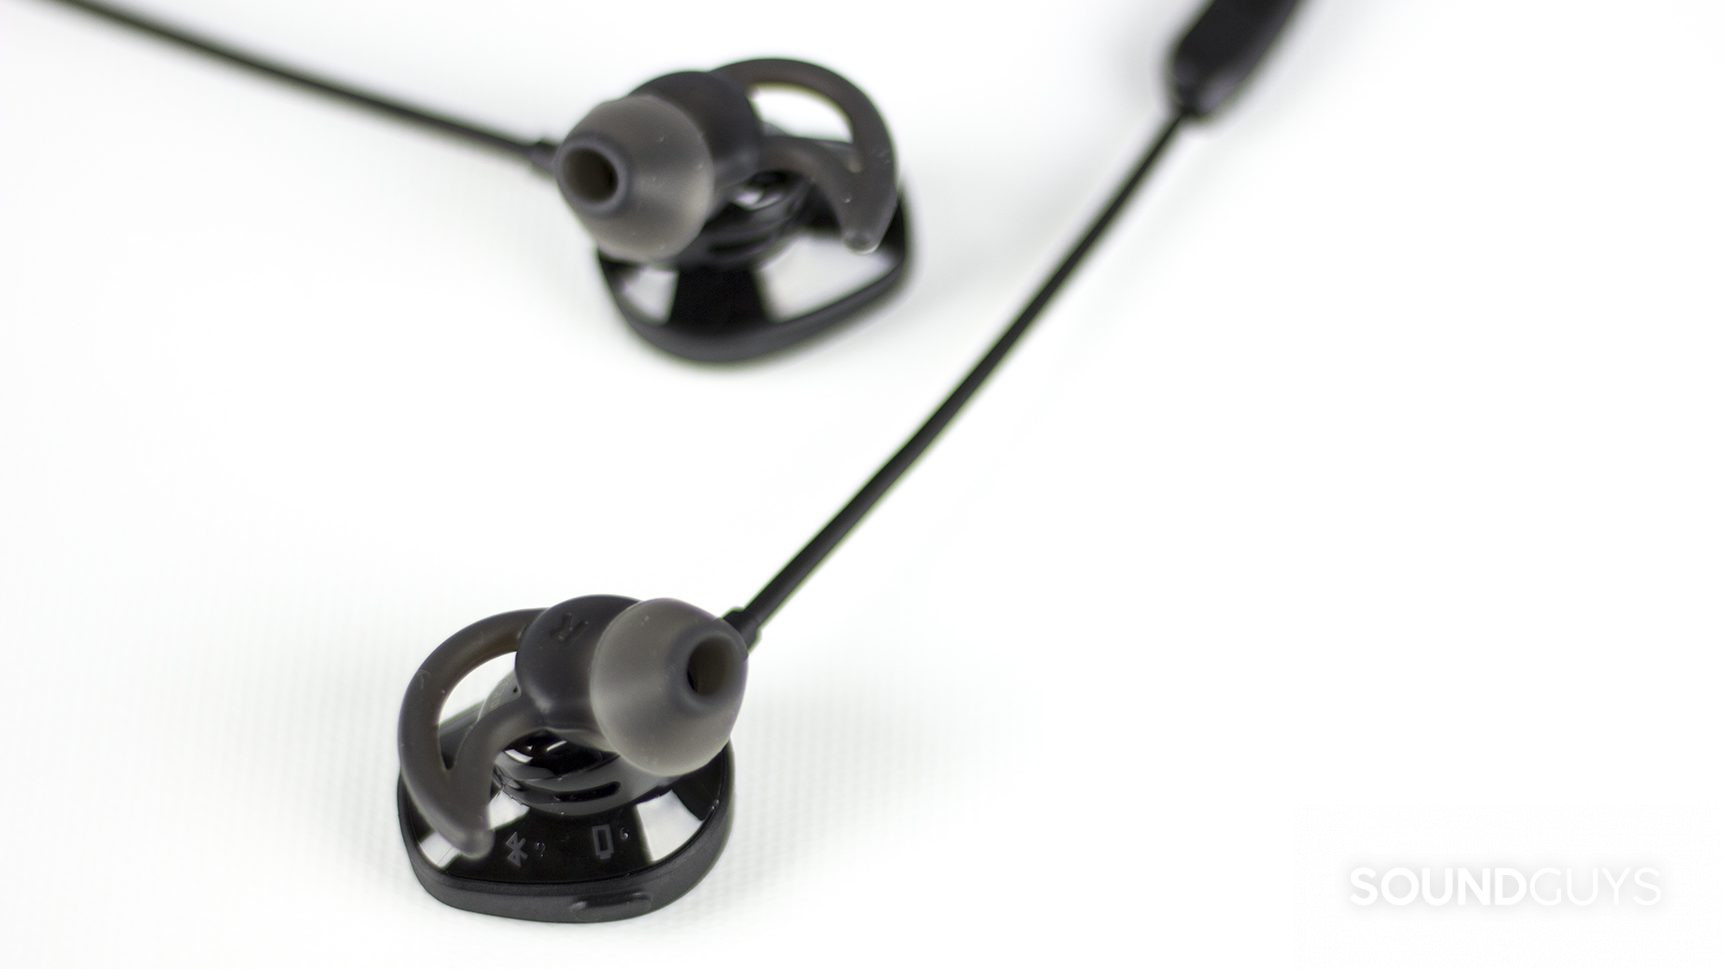 Bose Soundsport Bluetooth Wireless Headphones - Black : Target